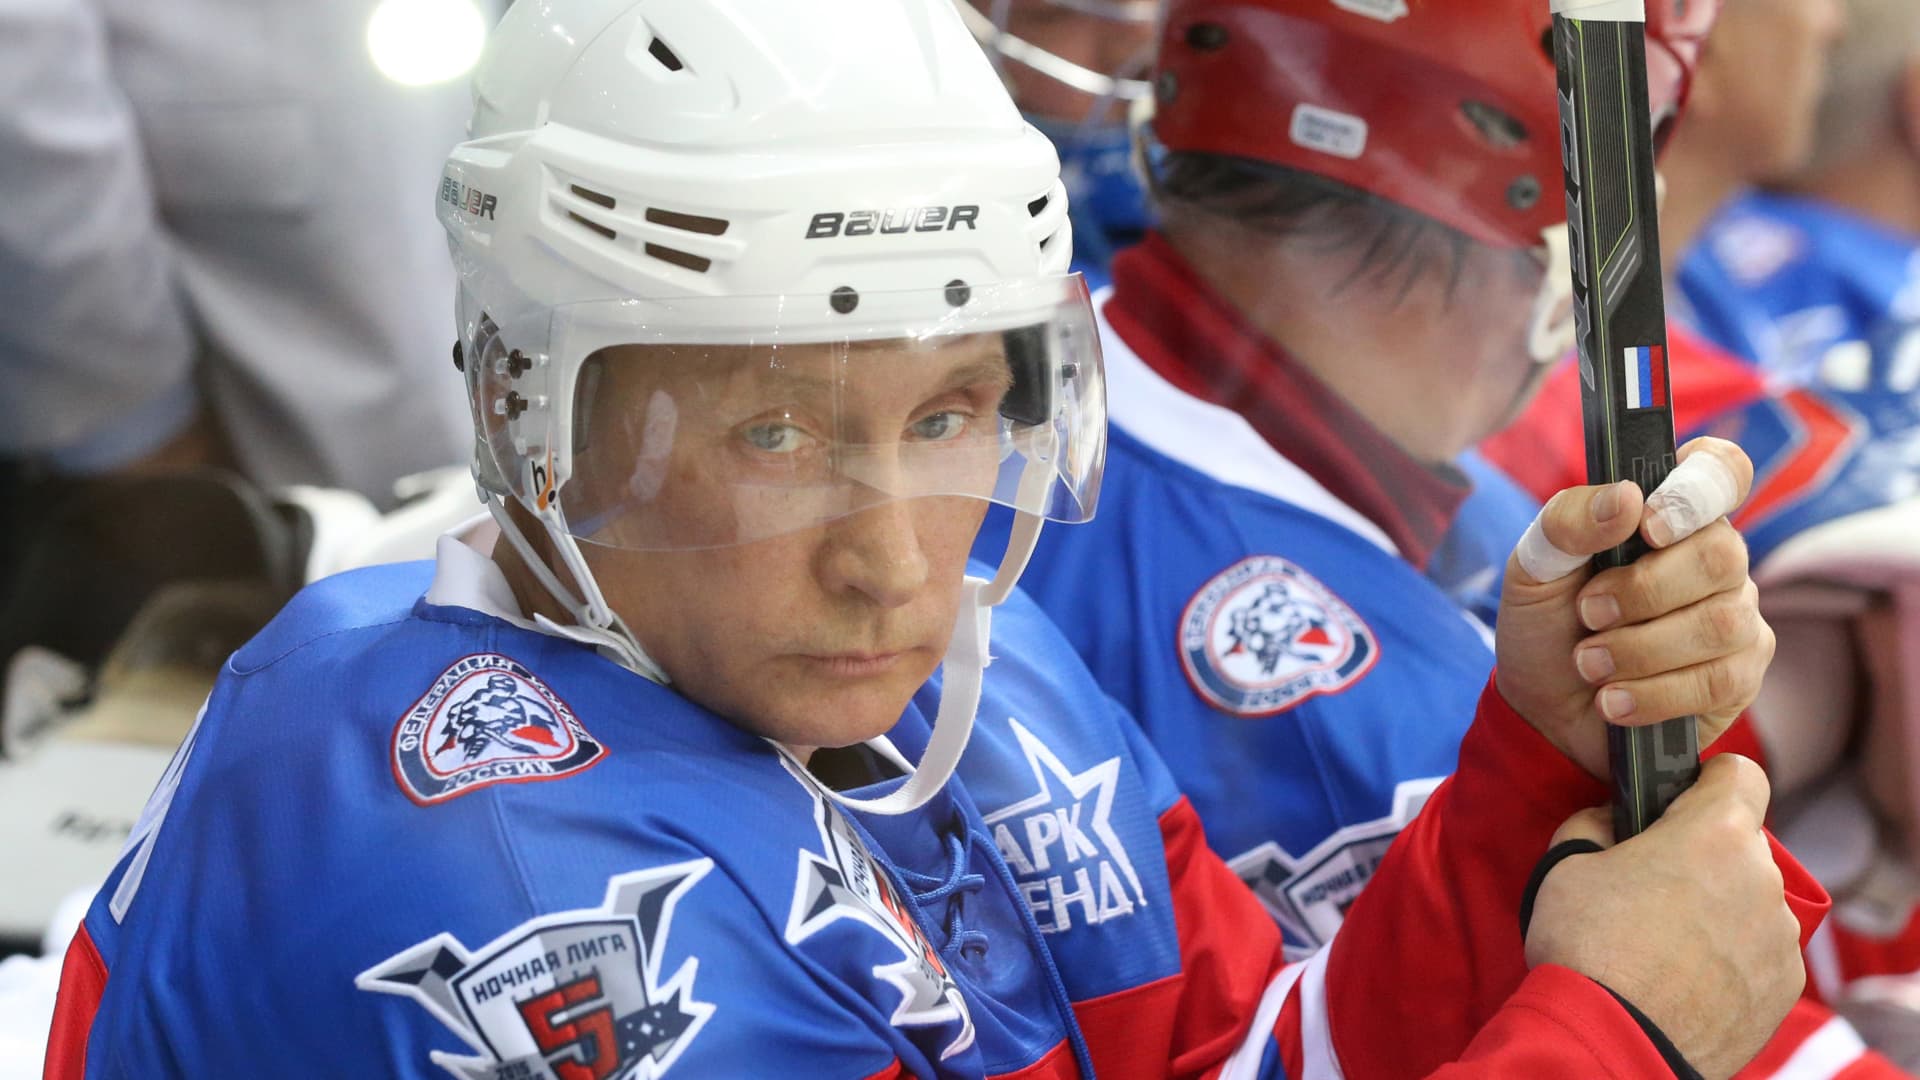 Russian President Vladimir Putin attends a Night Hockey League ice hockey match on October 7, 2015 in Sochi, Russia. Putin spent his 63rd birthday playing hockey with NHL stars.